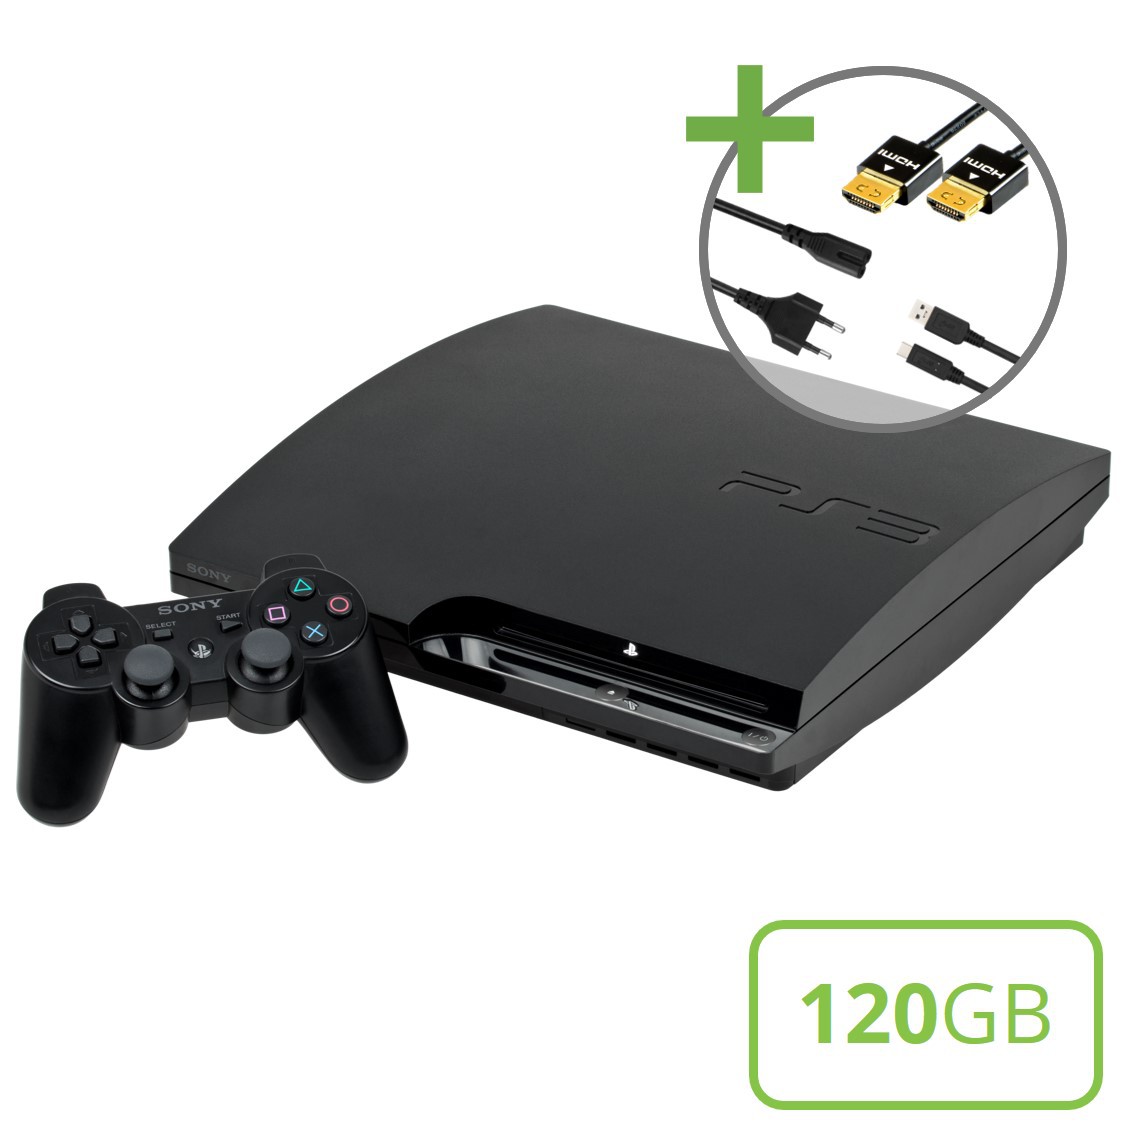 Sony PlayStation 3 Slim (120GB) Starter Pack - DualShock Edition Kopen | Playstation 3 Hardware